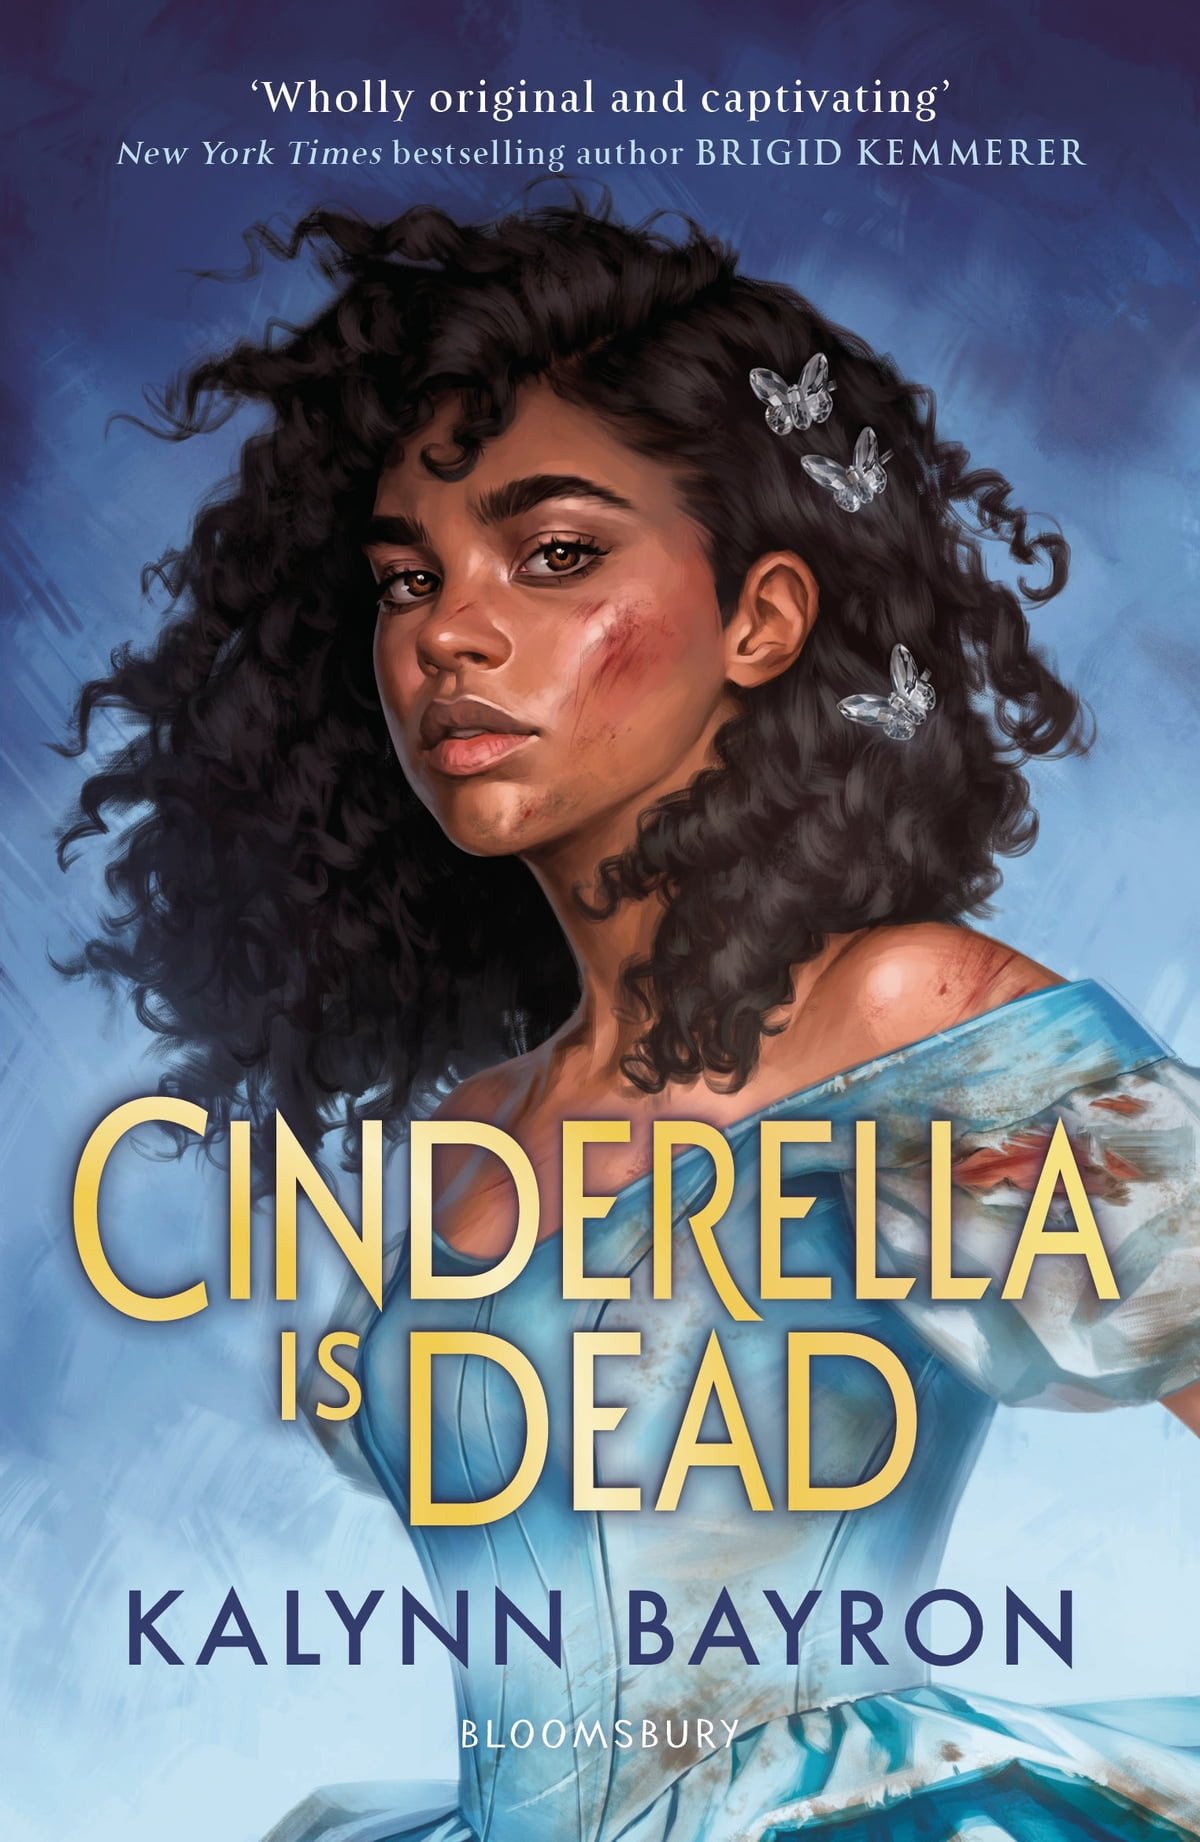 Book Review: Cinderella is Dead